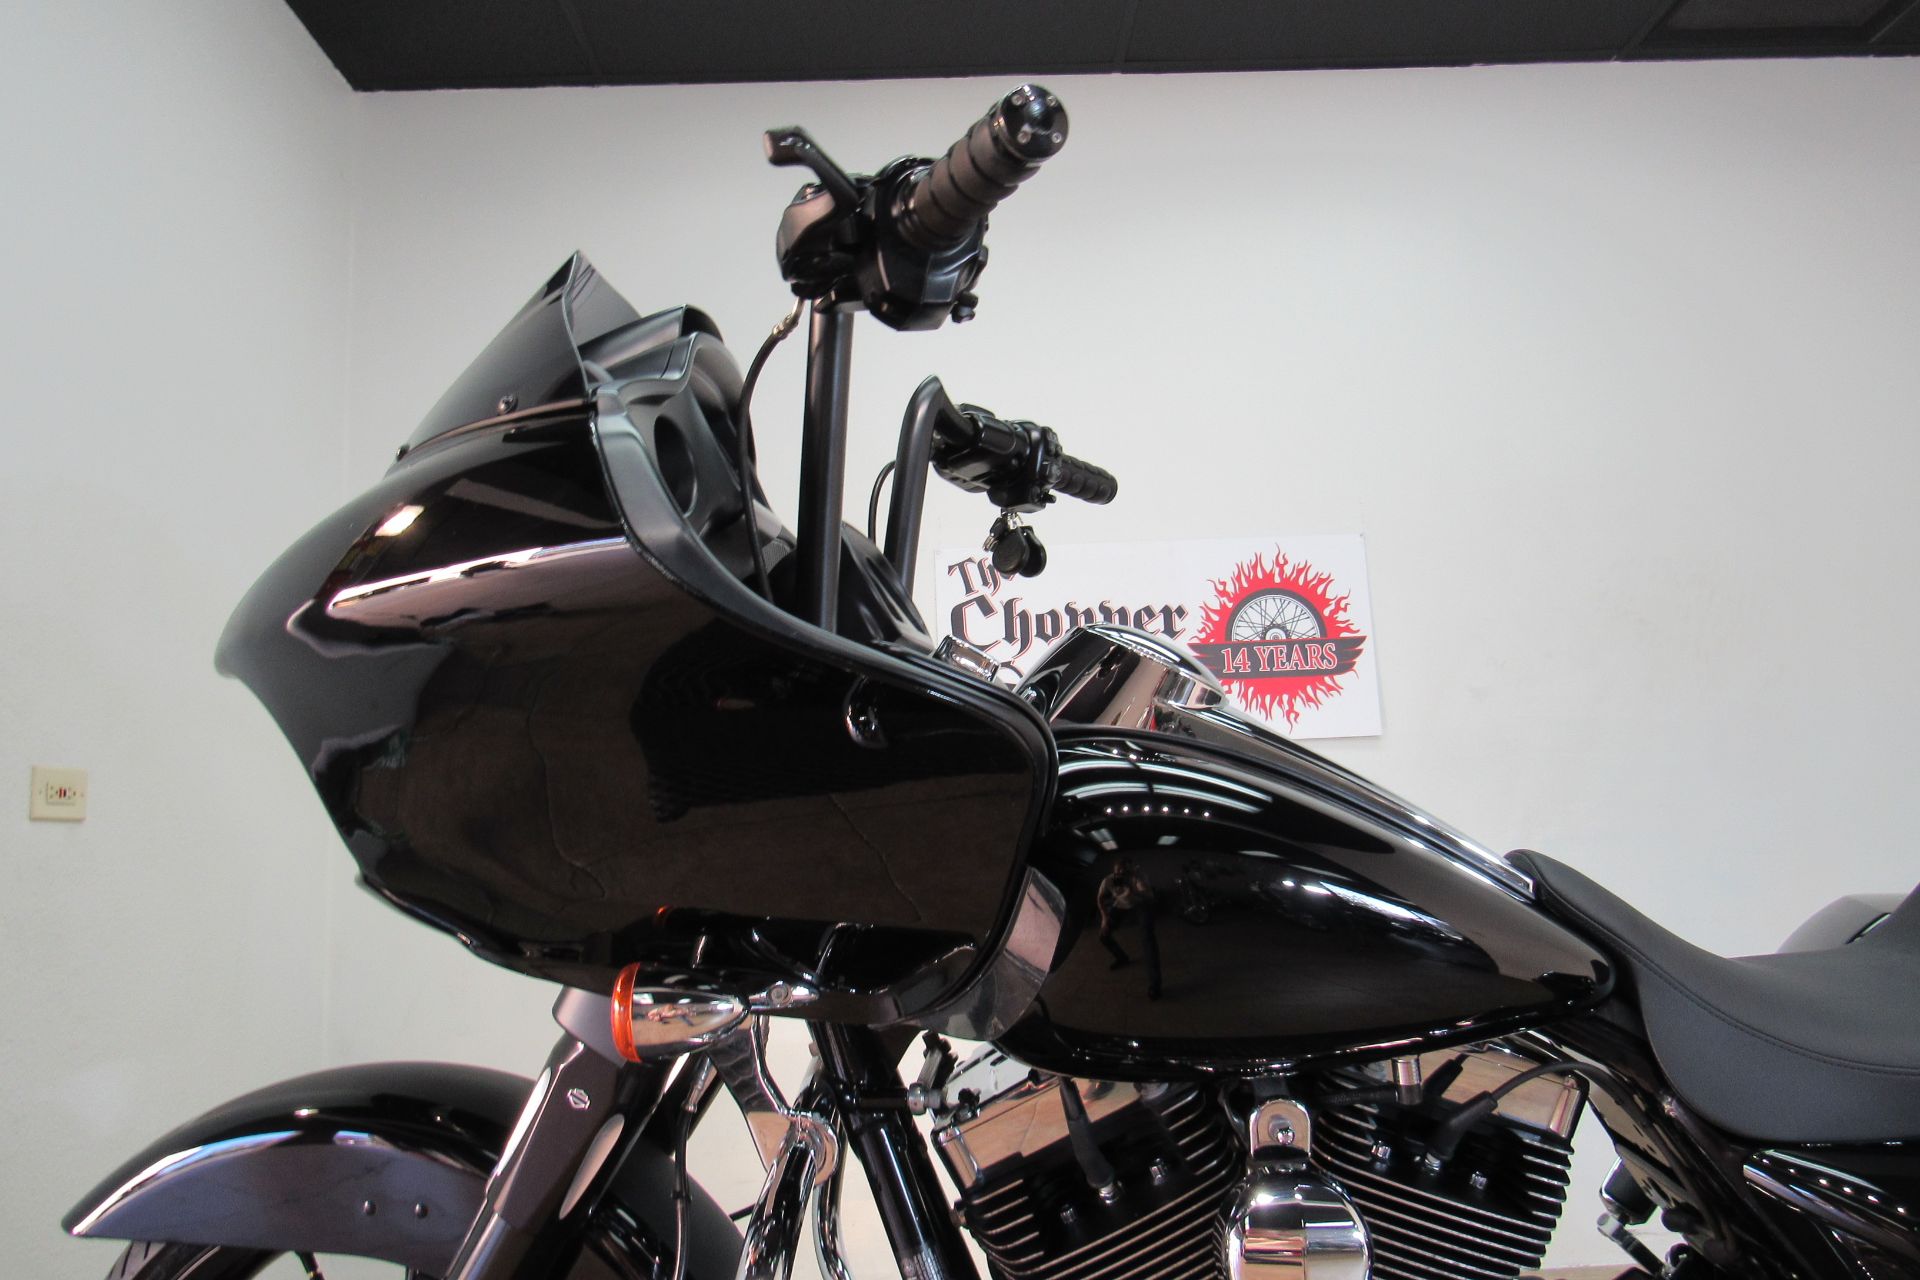 2015 Harley-Davidson Road Glide® Special in Temecula, California - Photo 10